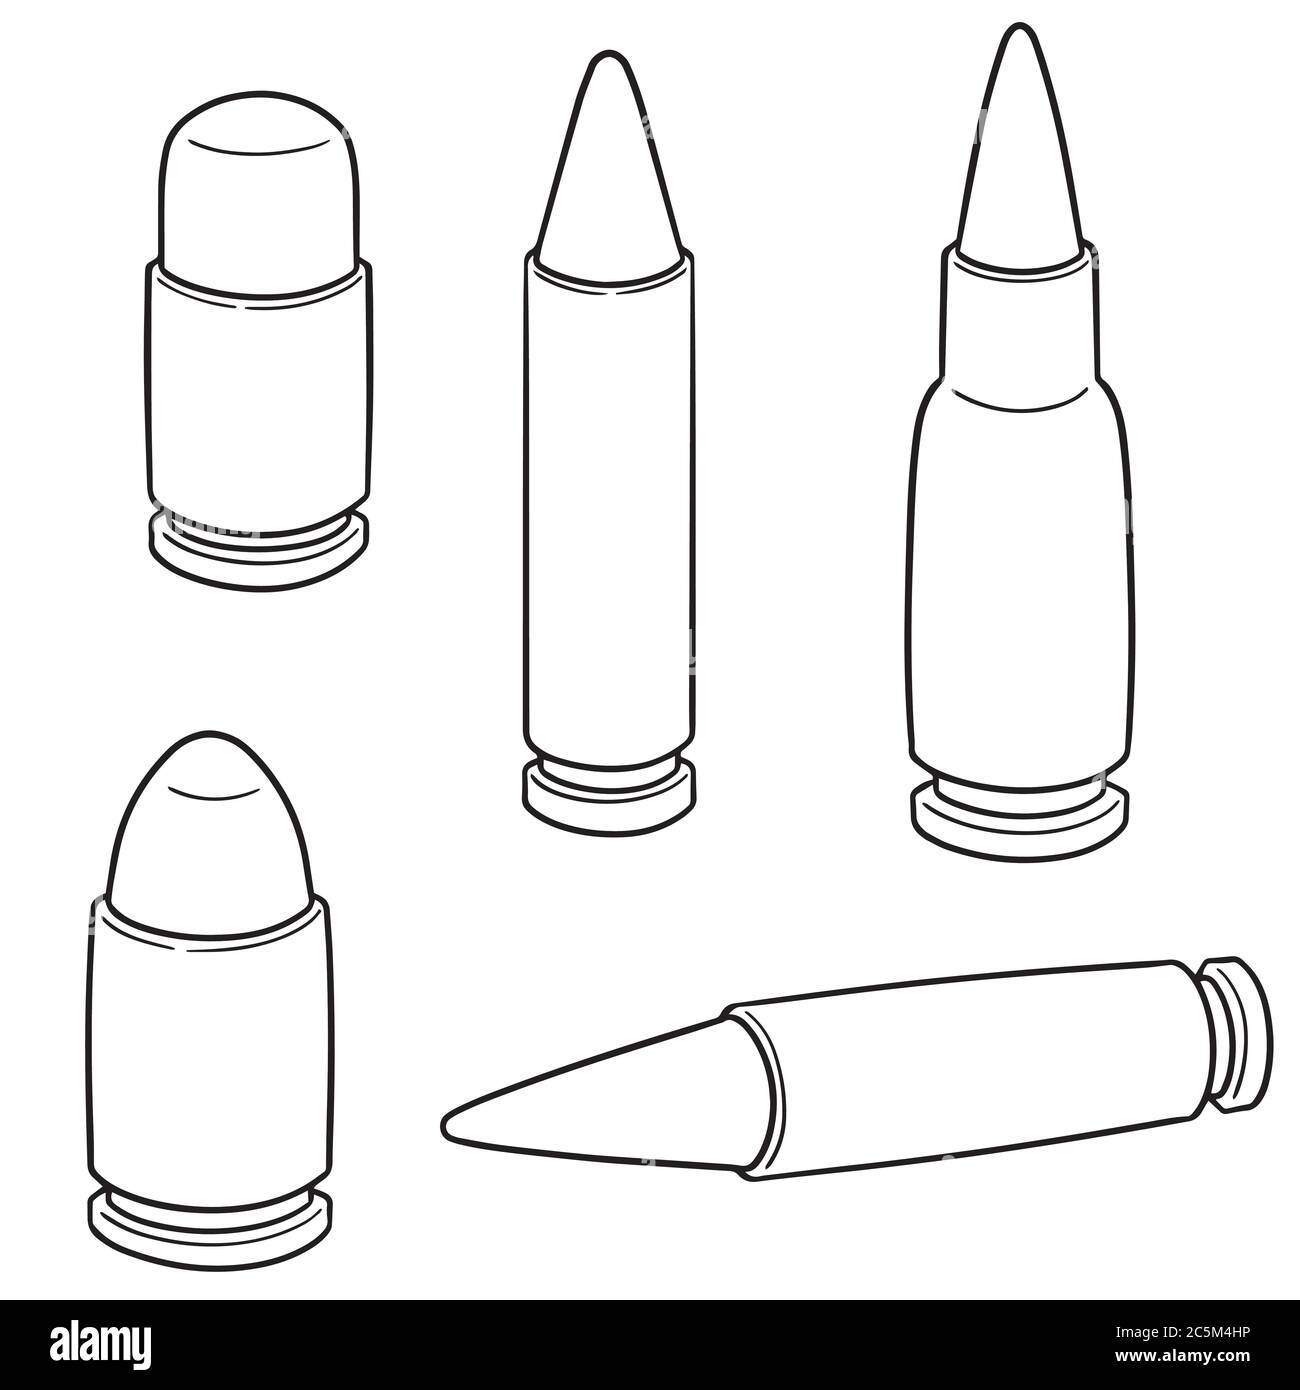 bullet drawing